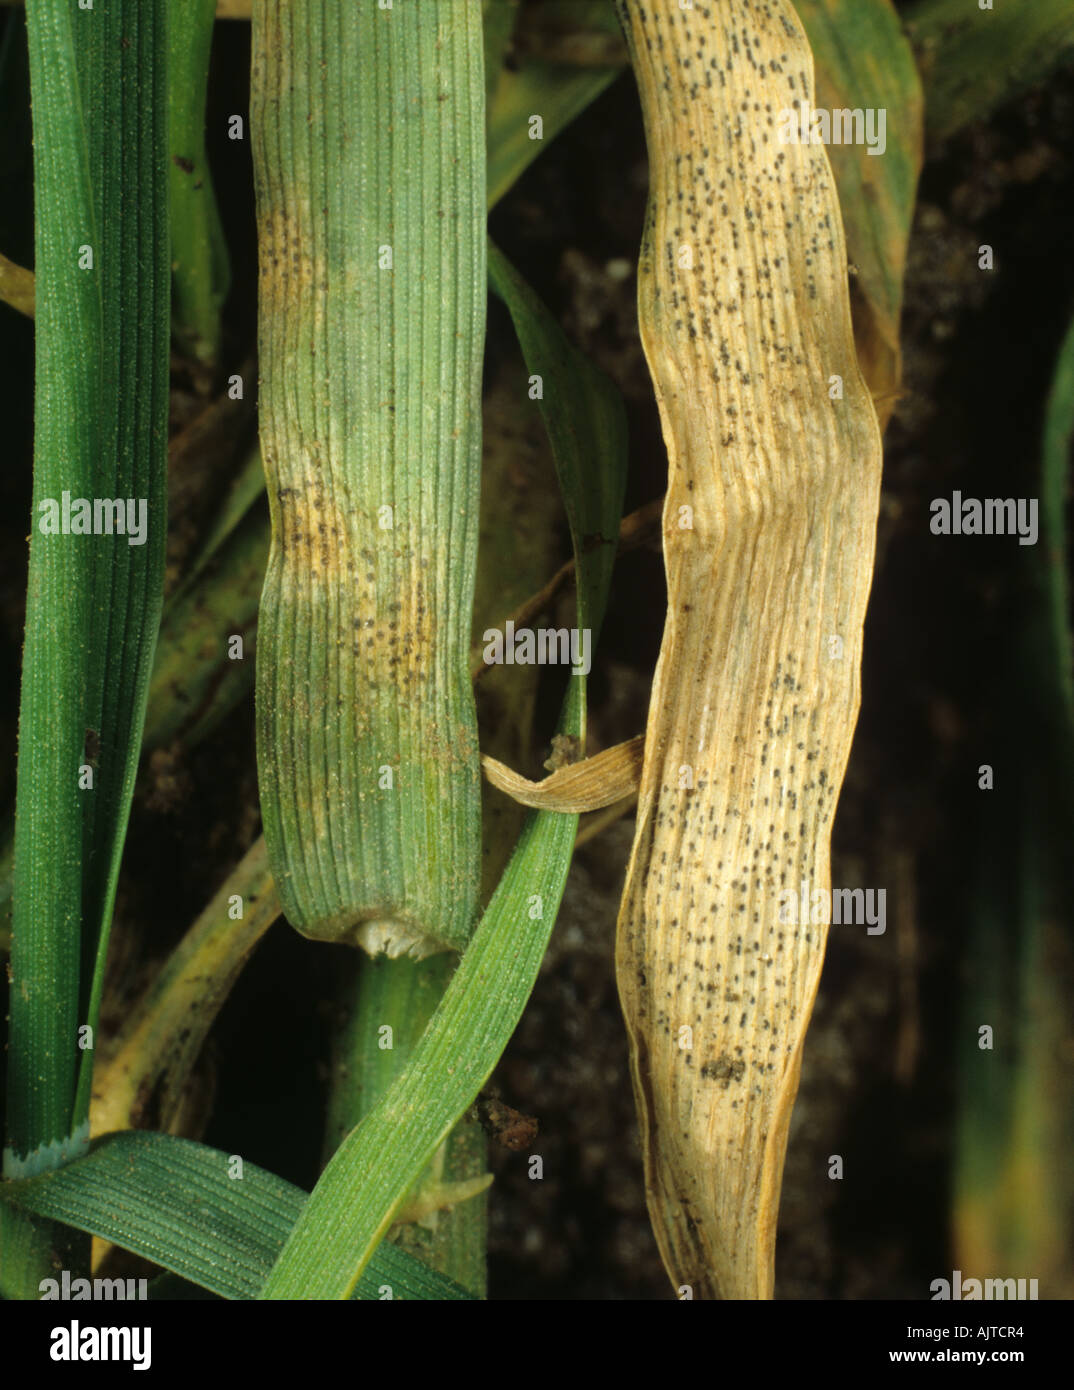 Septoria leaf spot Zymoseptoria tritici lesions pycnidia on wheat leaves Stock Photo